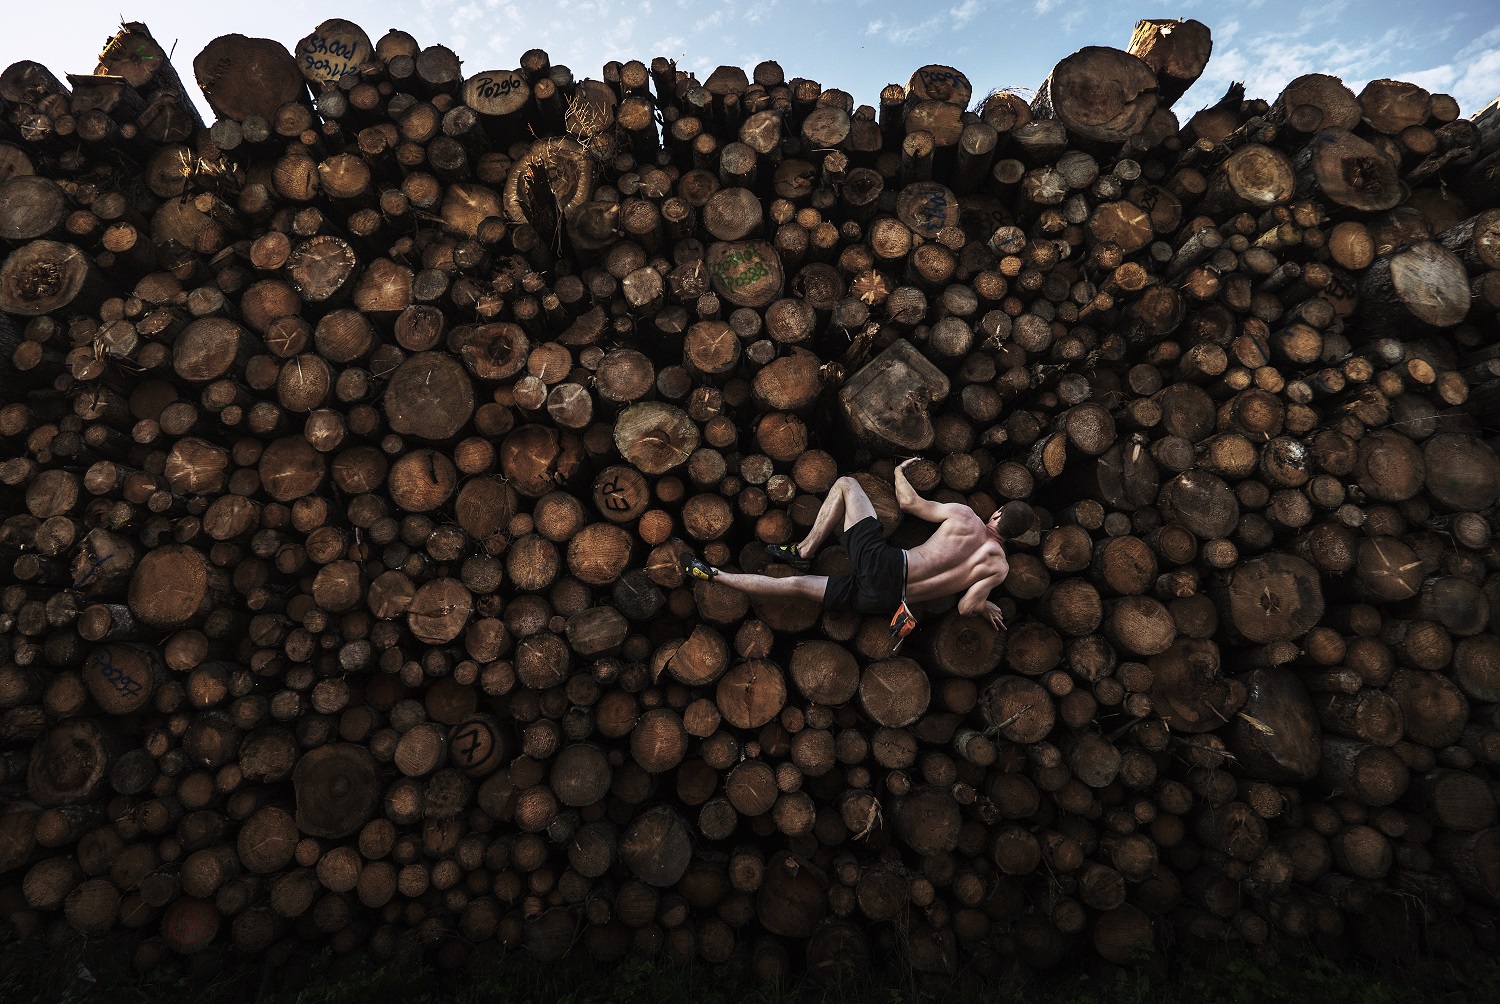 Shirtless rock climber on a stack of lumber